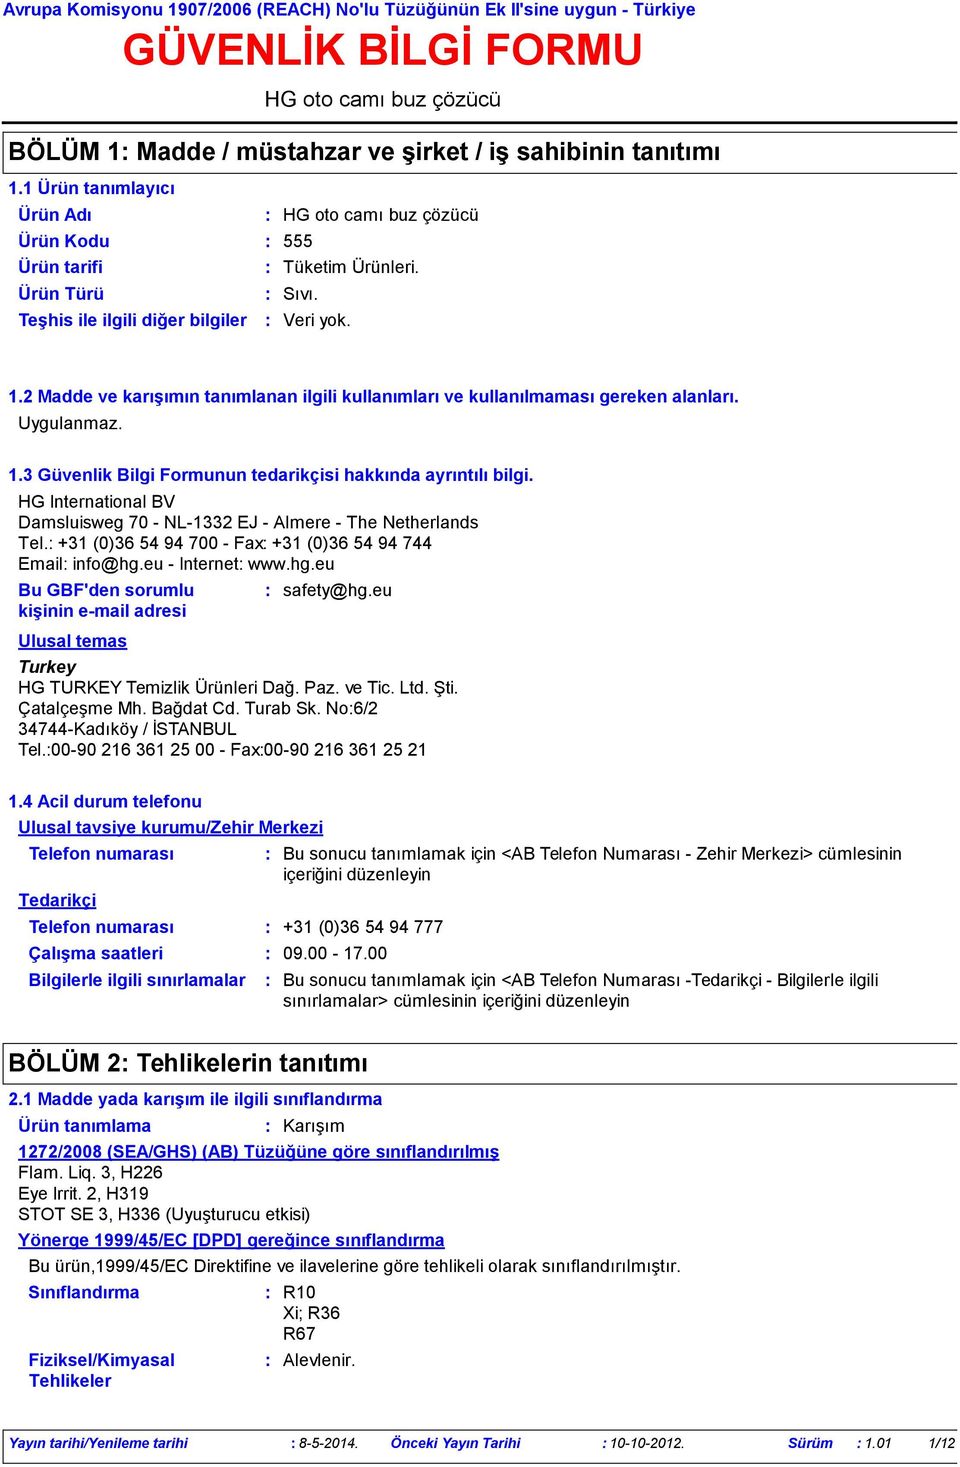 HG International BV Damsluisweg 70 - NL-1332 EJ - Almere - The Netherlands Tel. +31 (0)36 54 94 700 - Fax +31 (0)36 54 94 744 Email info@hg.